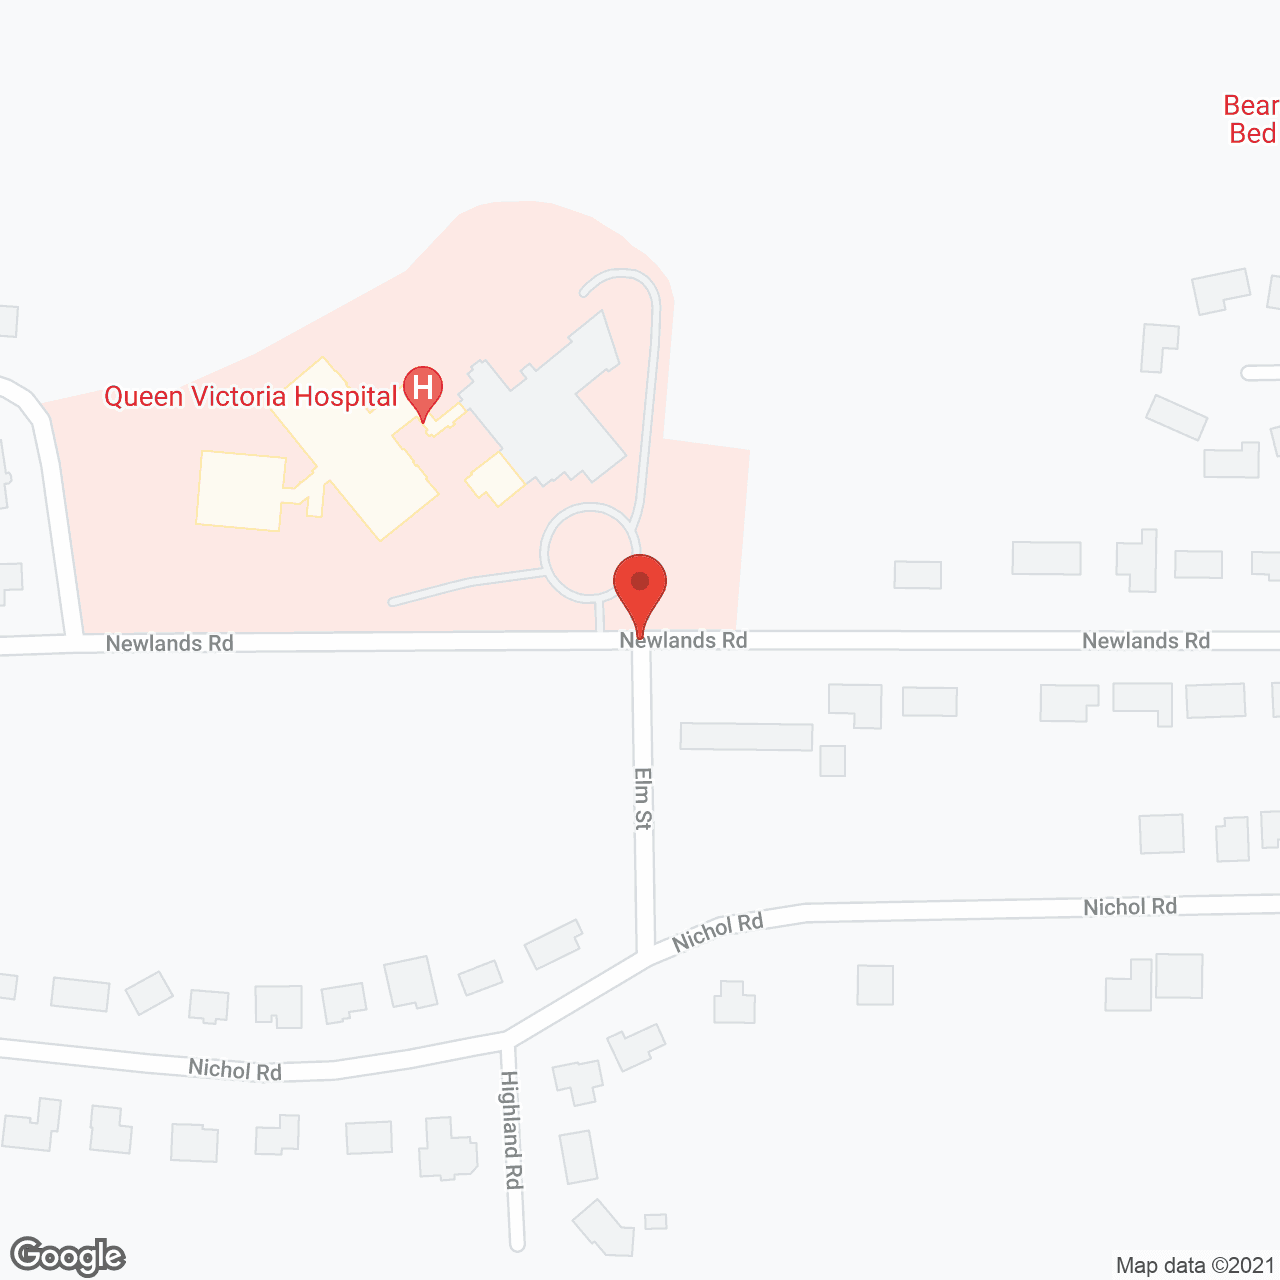 Mount Cartier Court in google map